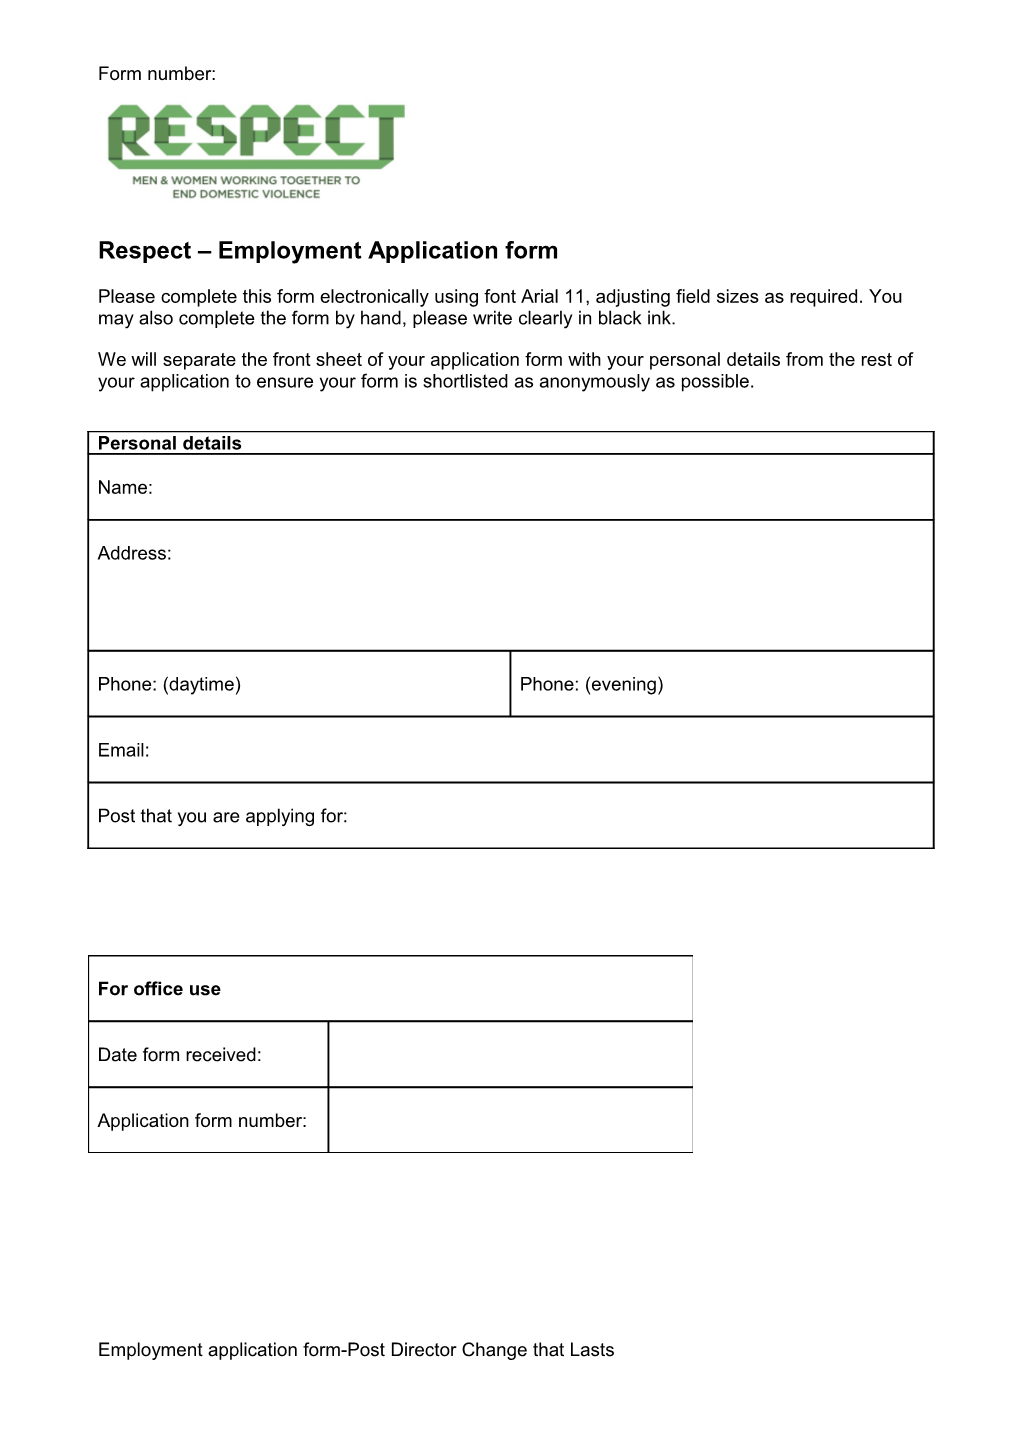 Respect Employment Application Form 2014